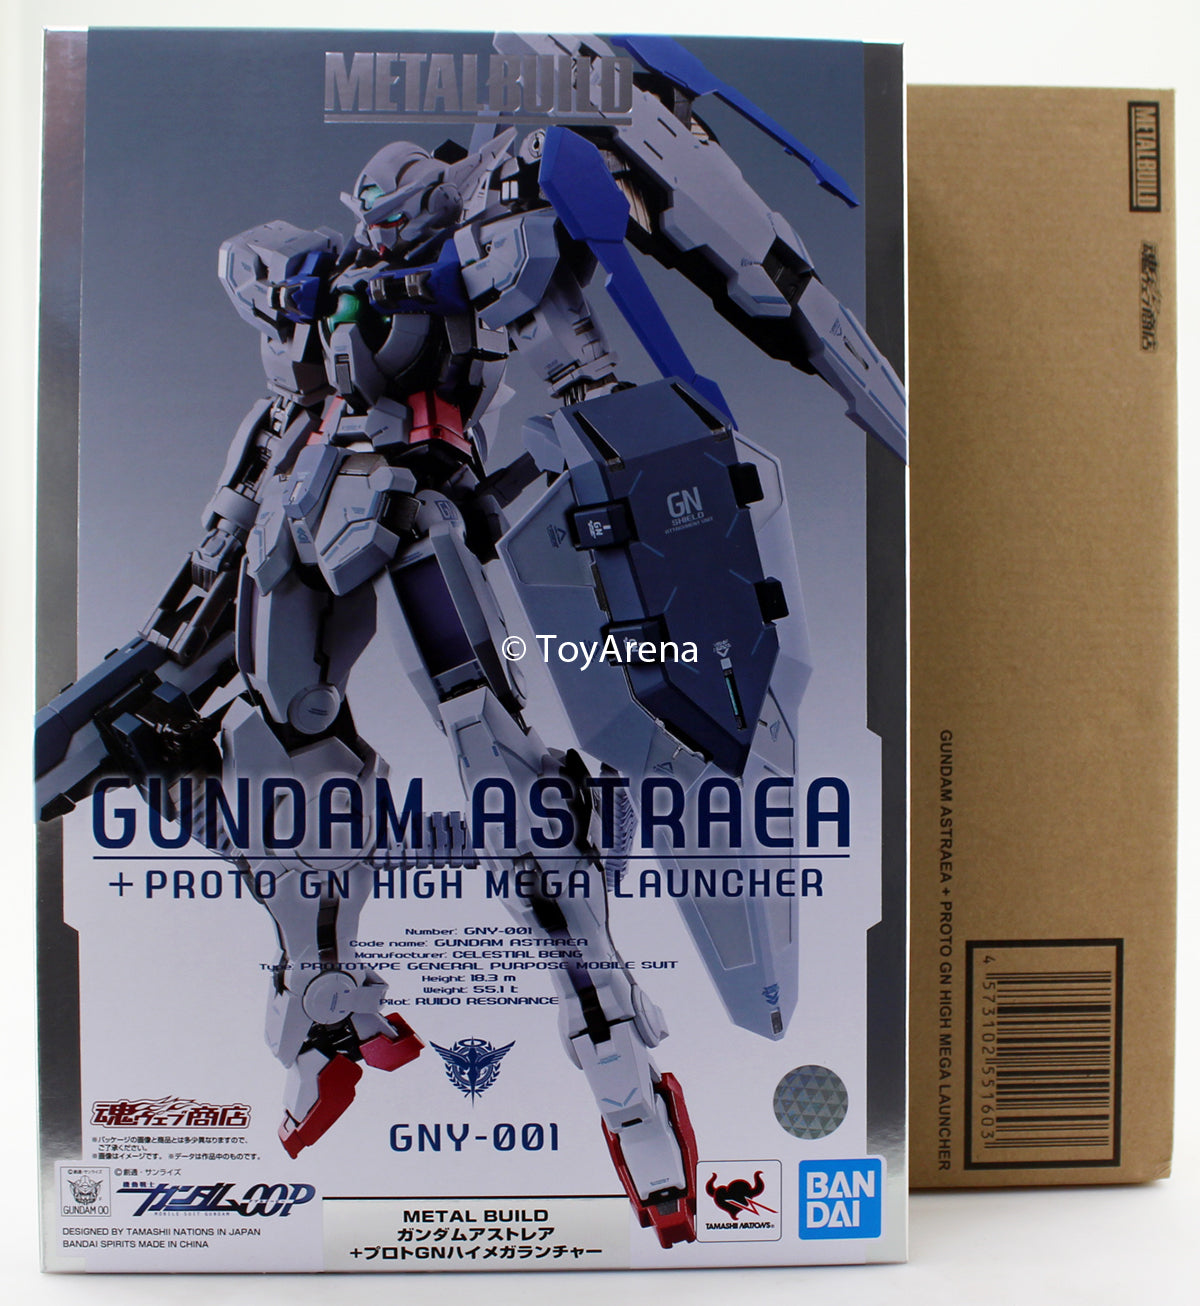 Gundam Metal Build Gundam Astraea + Proto GN High Mega Launcher Exclusive Action Figure